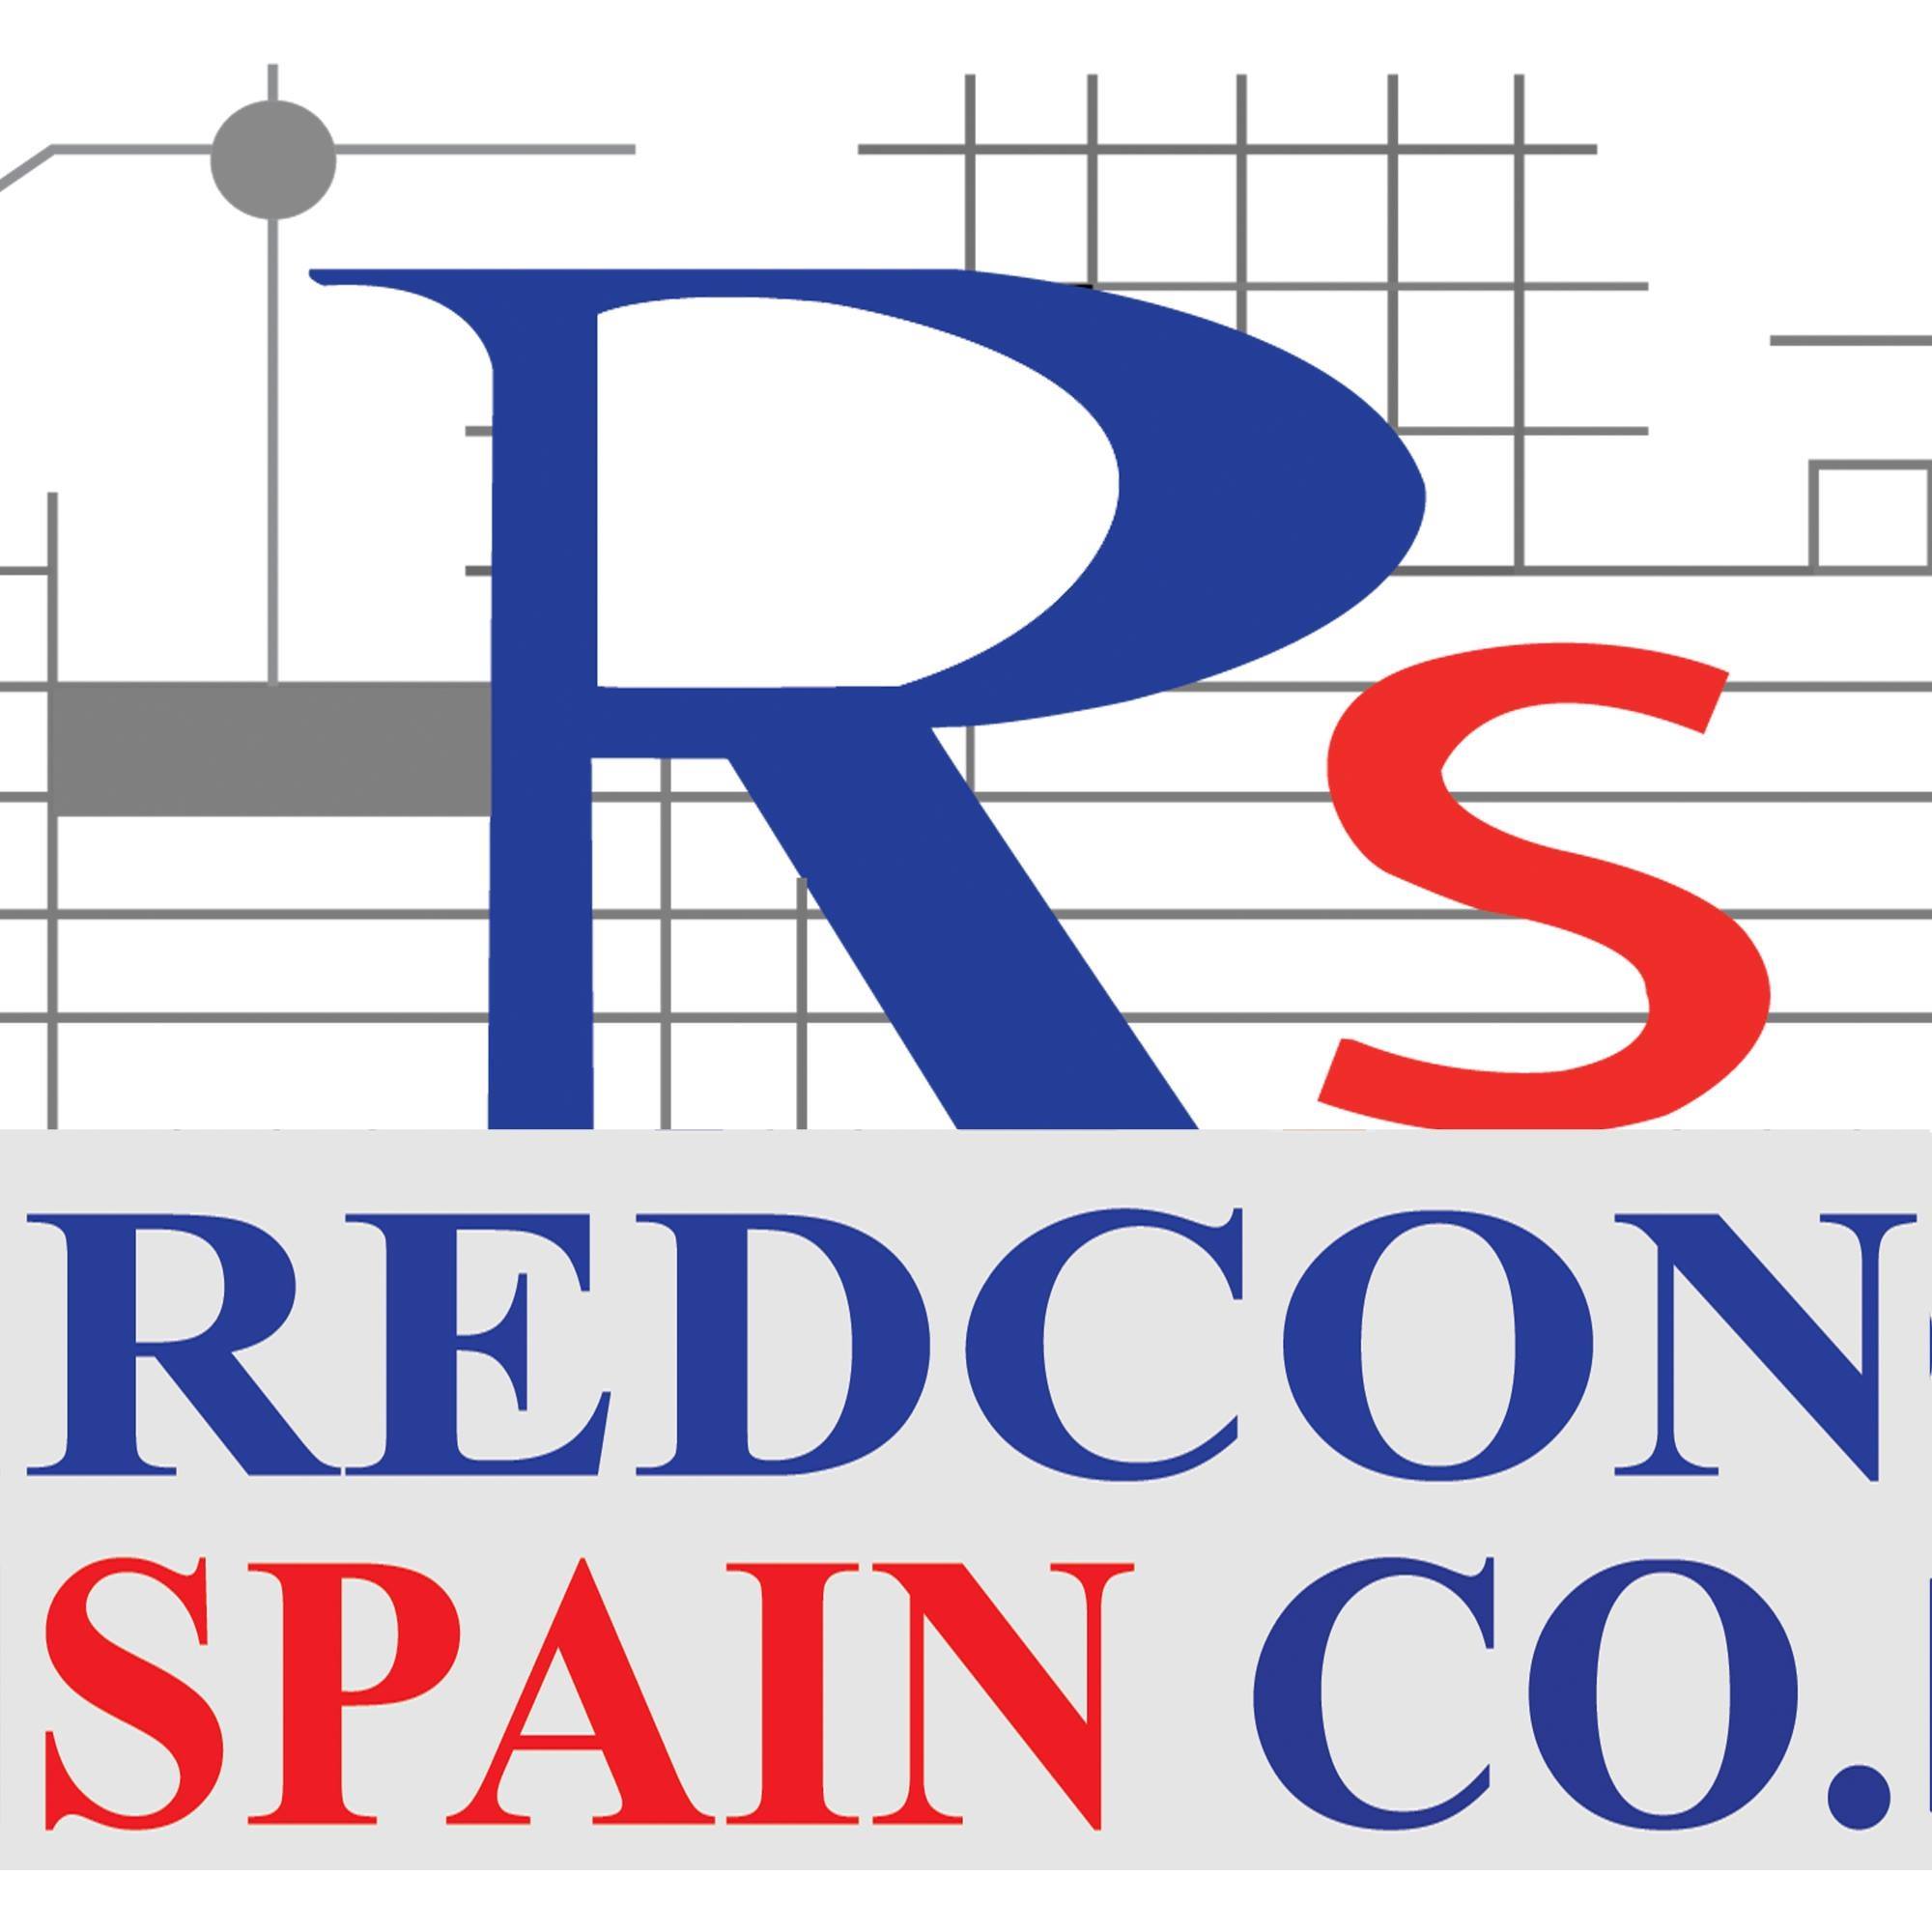 Redcon Spain construction